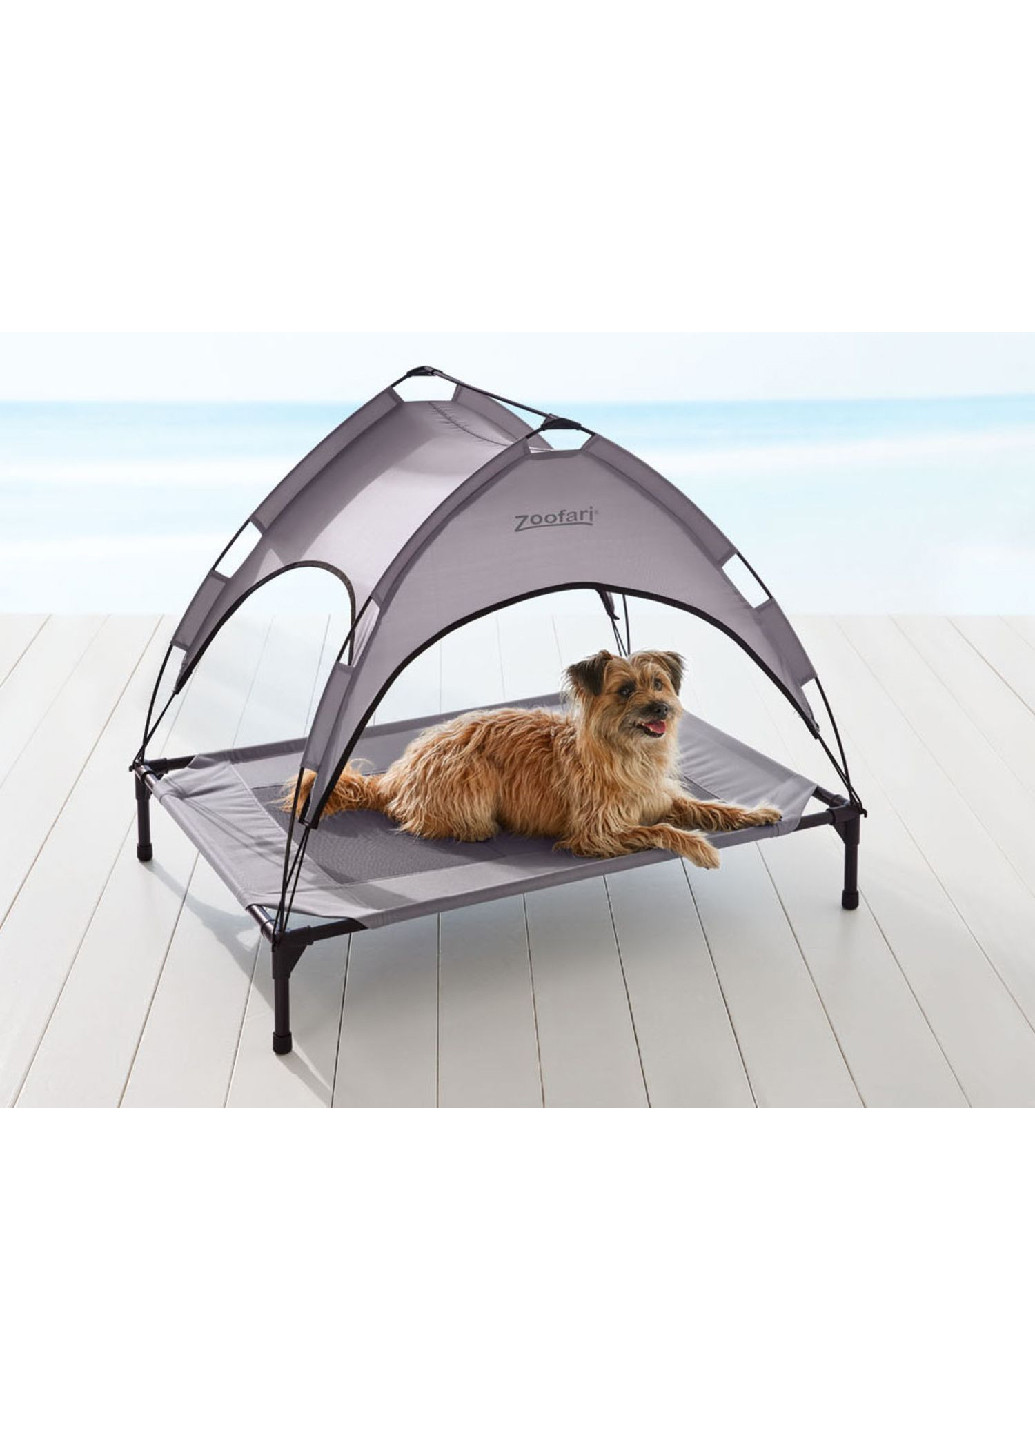 Лежак для собаки с навесом от солнца серый Zoofari (260492582)